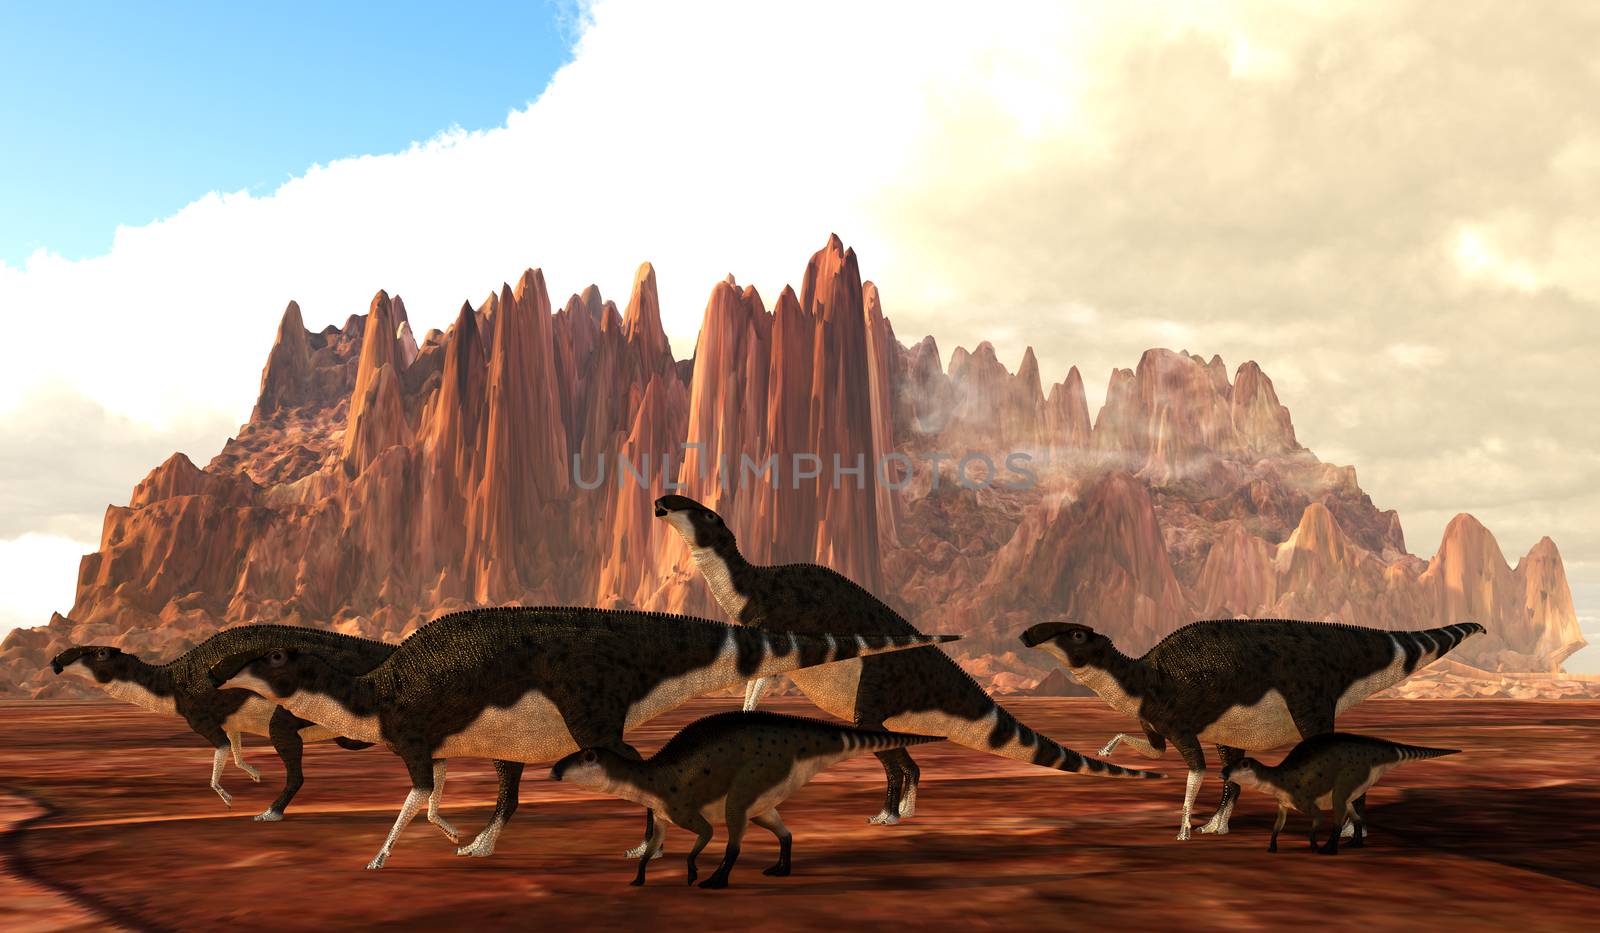 Brachylophosaurus Dinosaur Herd by Catmando